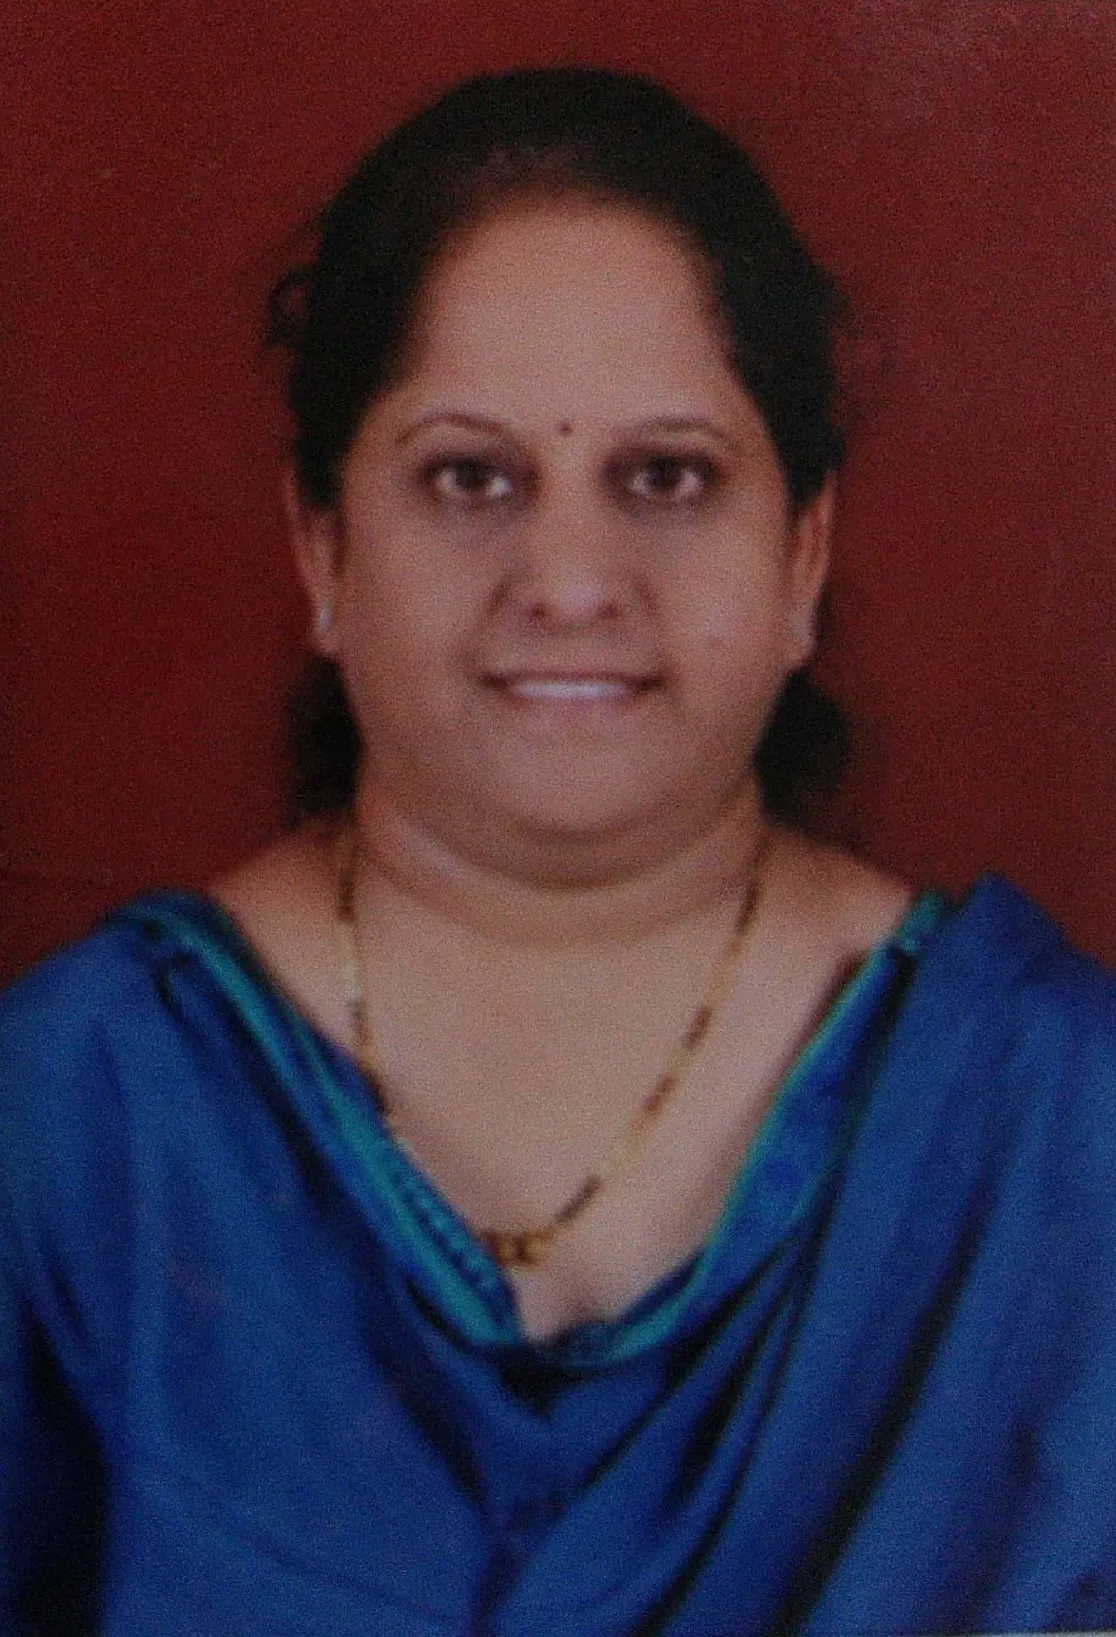 Ms. Rucha Desai